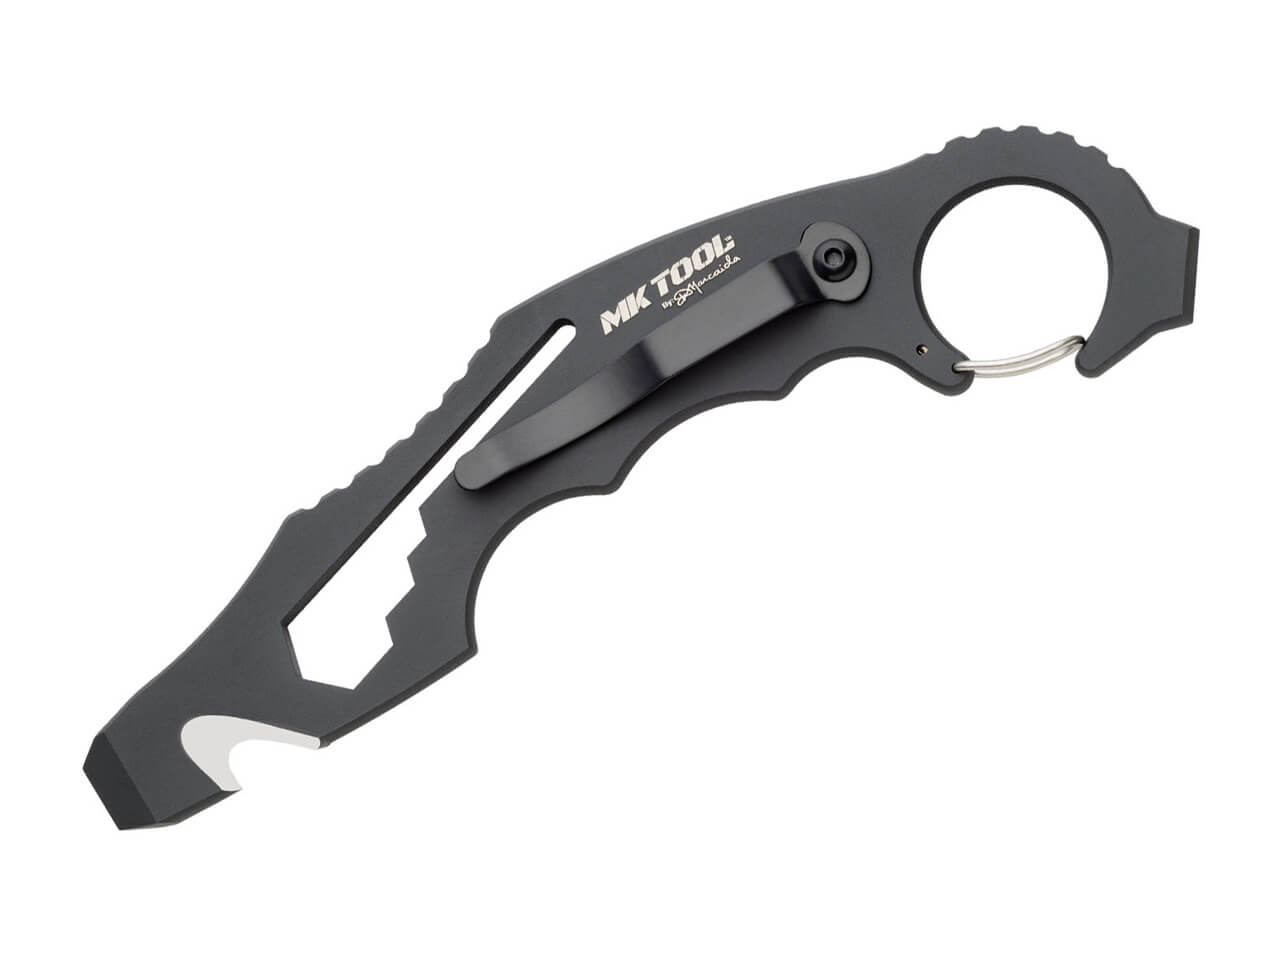 https://www.bokerusa.com/media/image/b4/03/93/fox-knives-mk-rescue-tool-fixed-02fx688.jpg